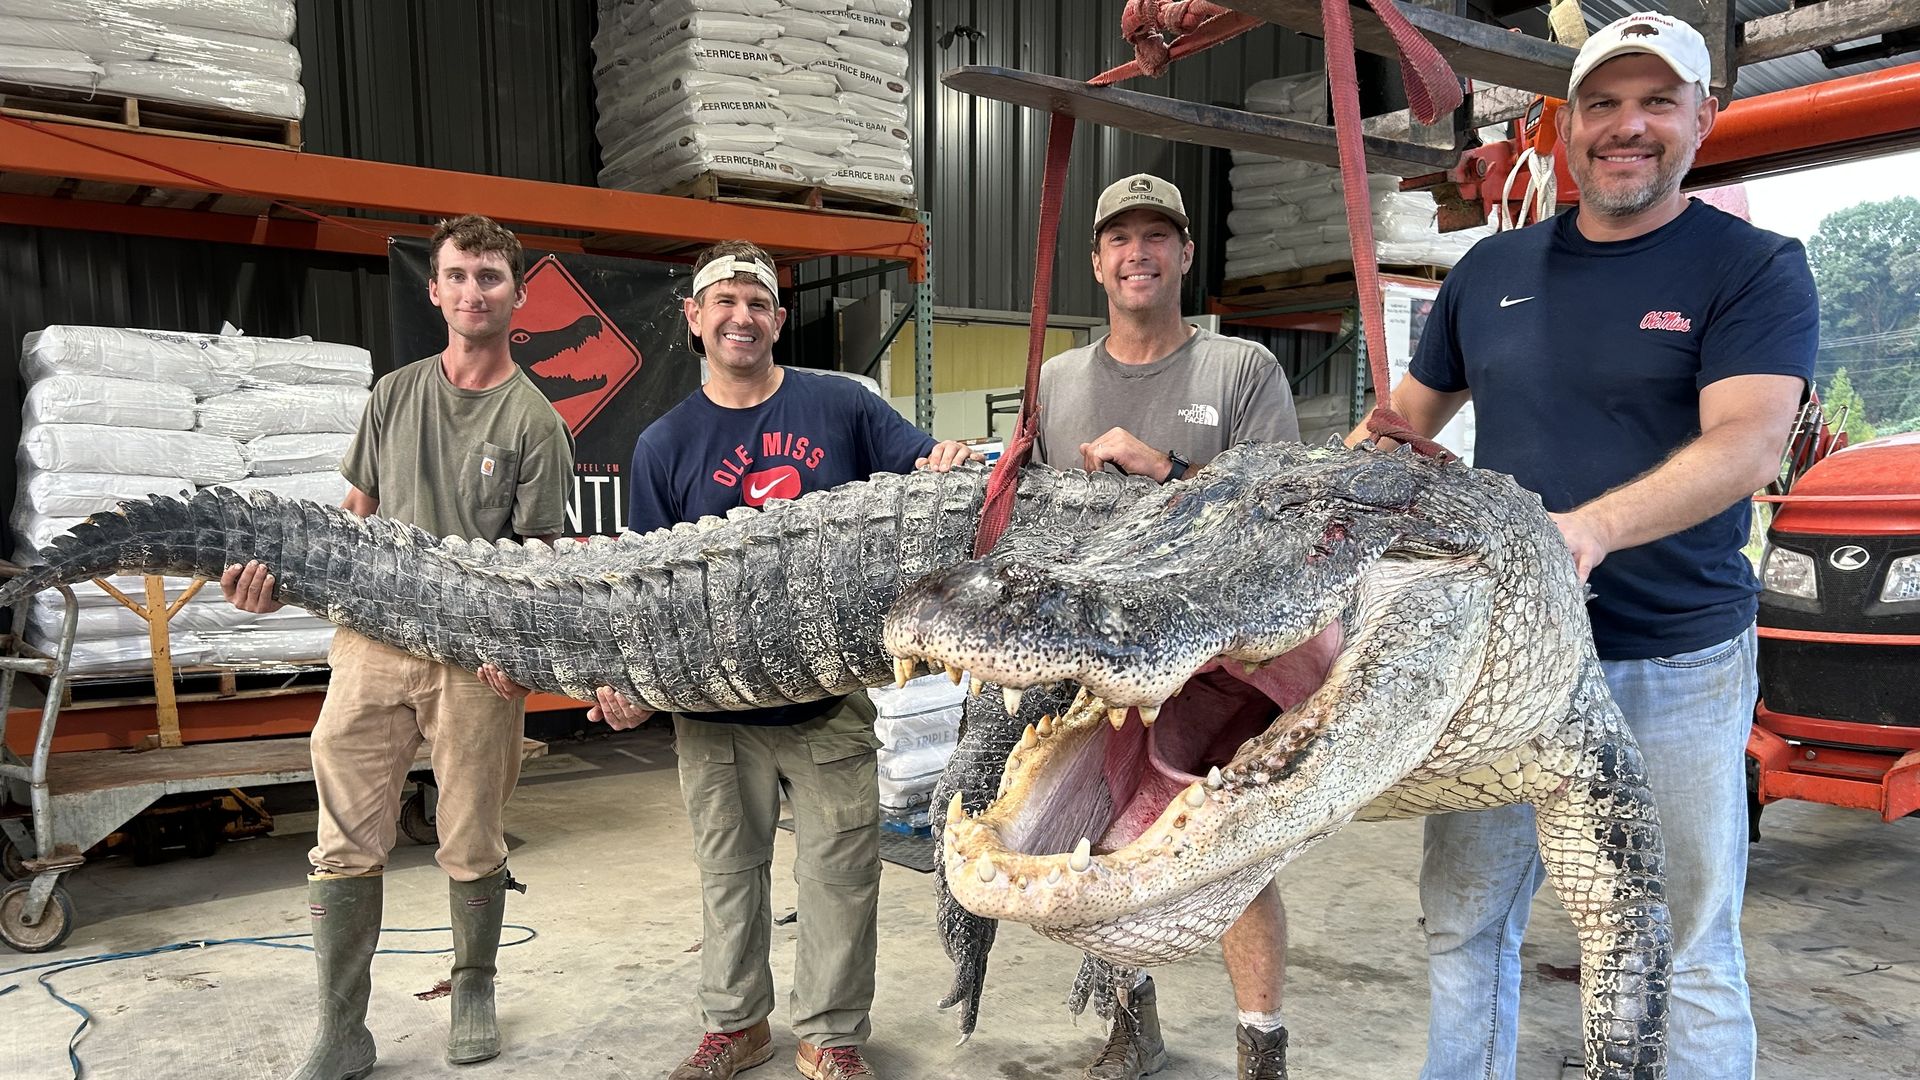 Photo shows four men holding a massive alligator